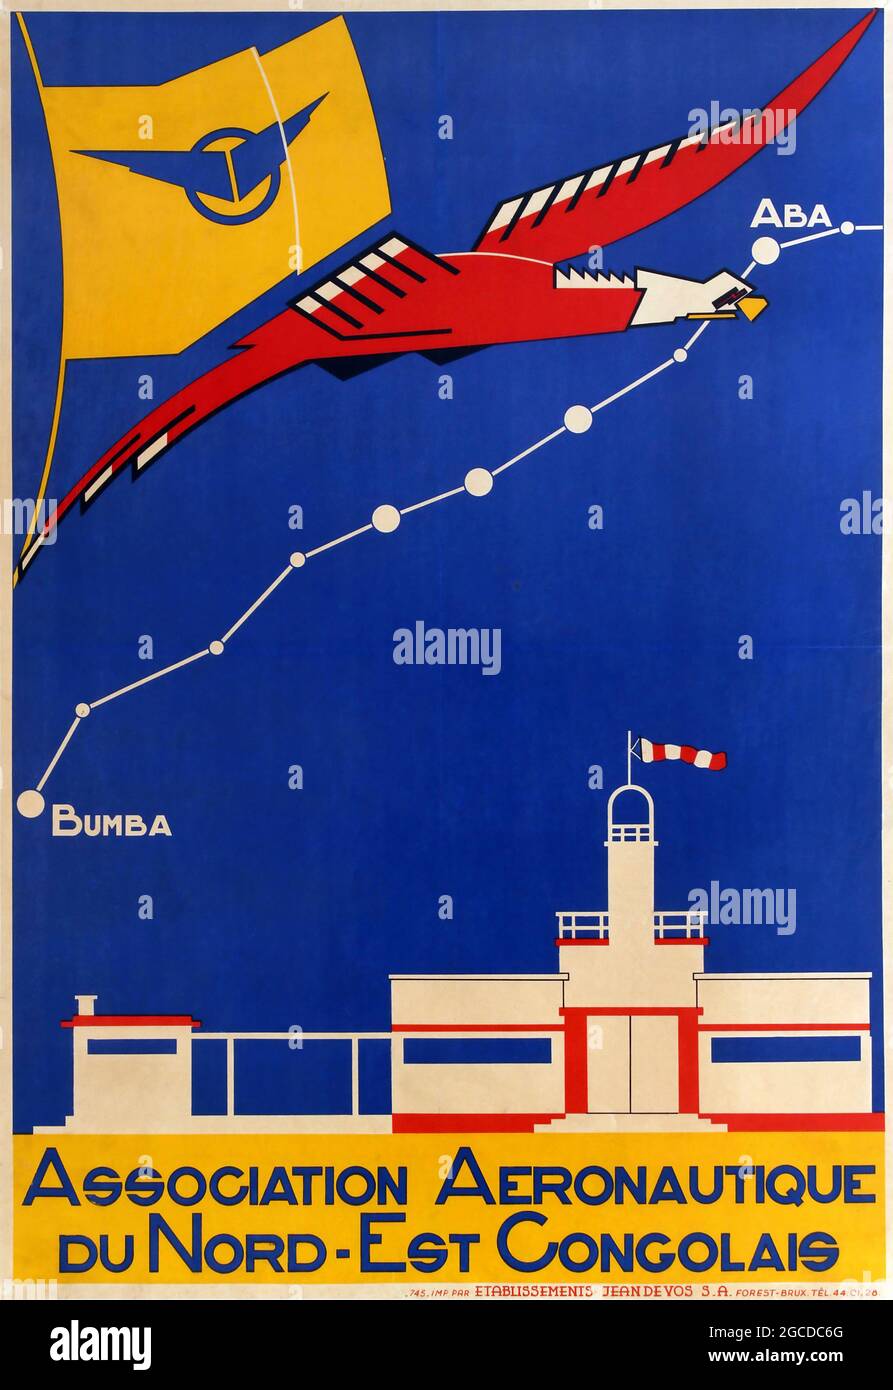 Vintage Aviation / Air / Flight poster – Africa Congo Aeronautic Poster Association Aeronautique Du Nord-Est Congolais. 1930s Stock Photo